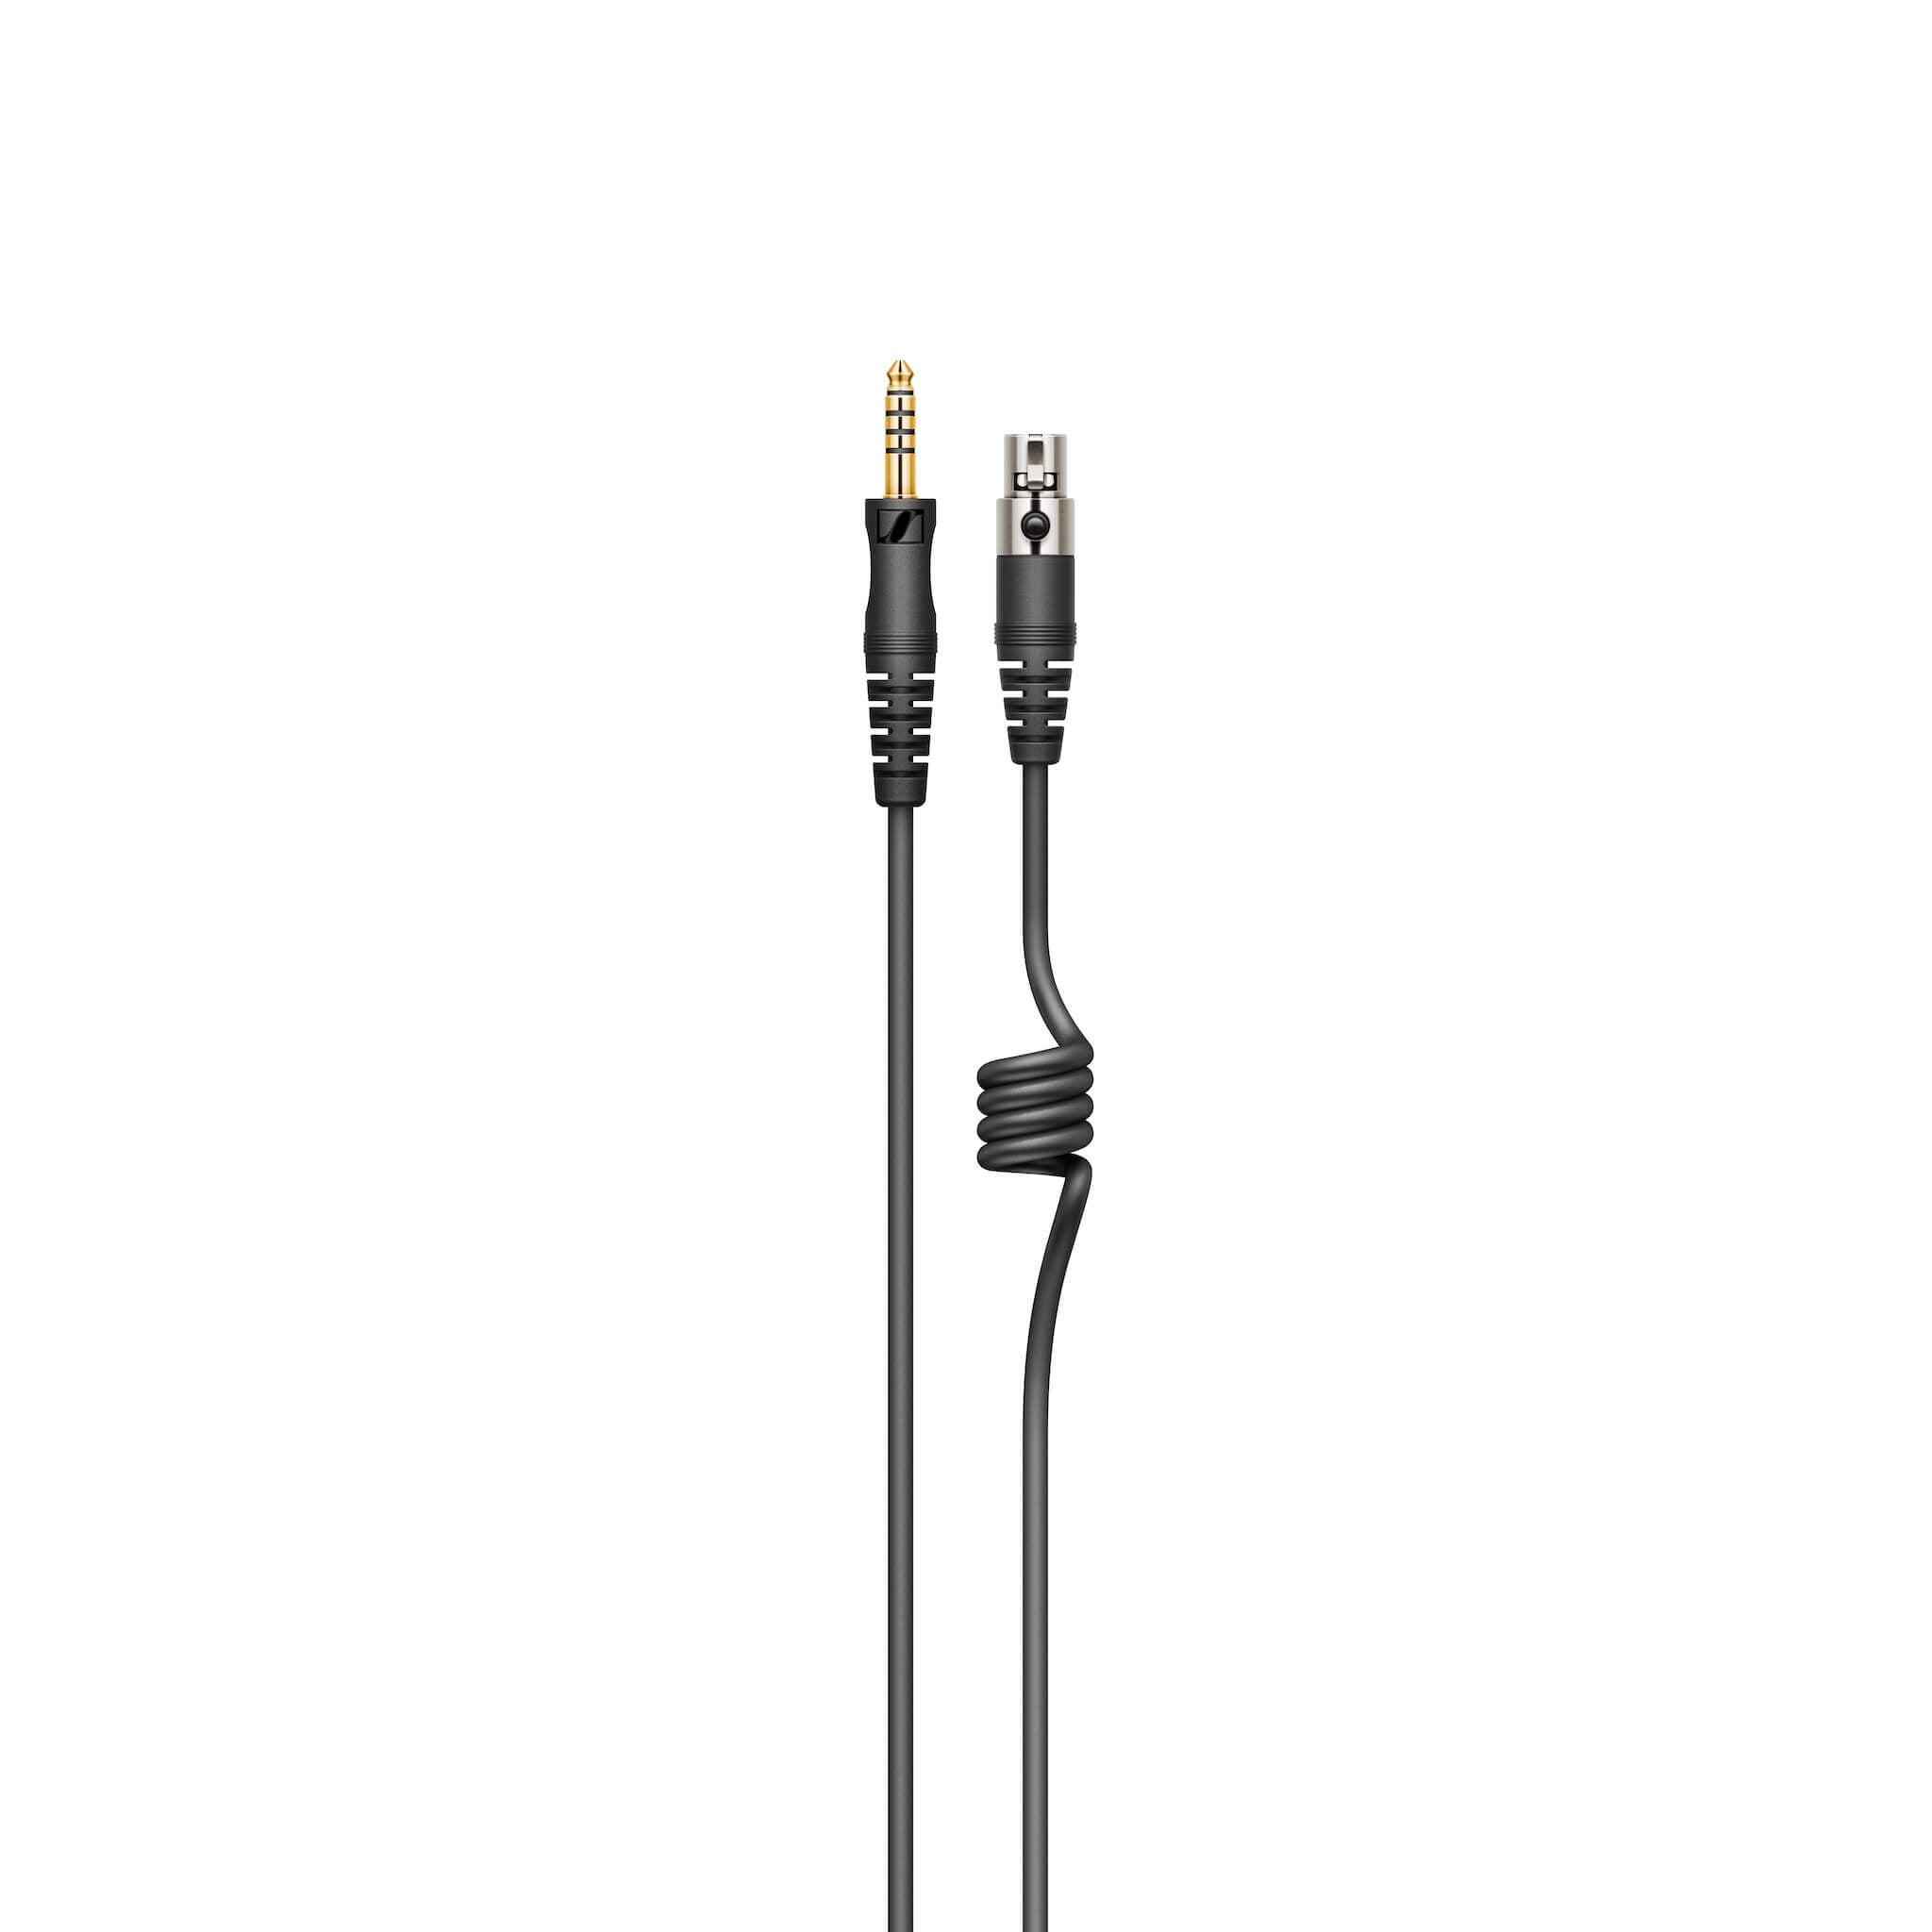 Sennheiser HD 490 PRO Plus - Professional Studio Reference Headphones, balanced cable